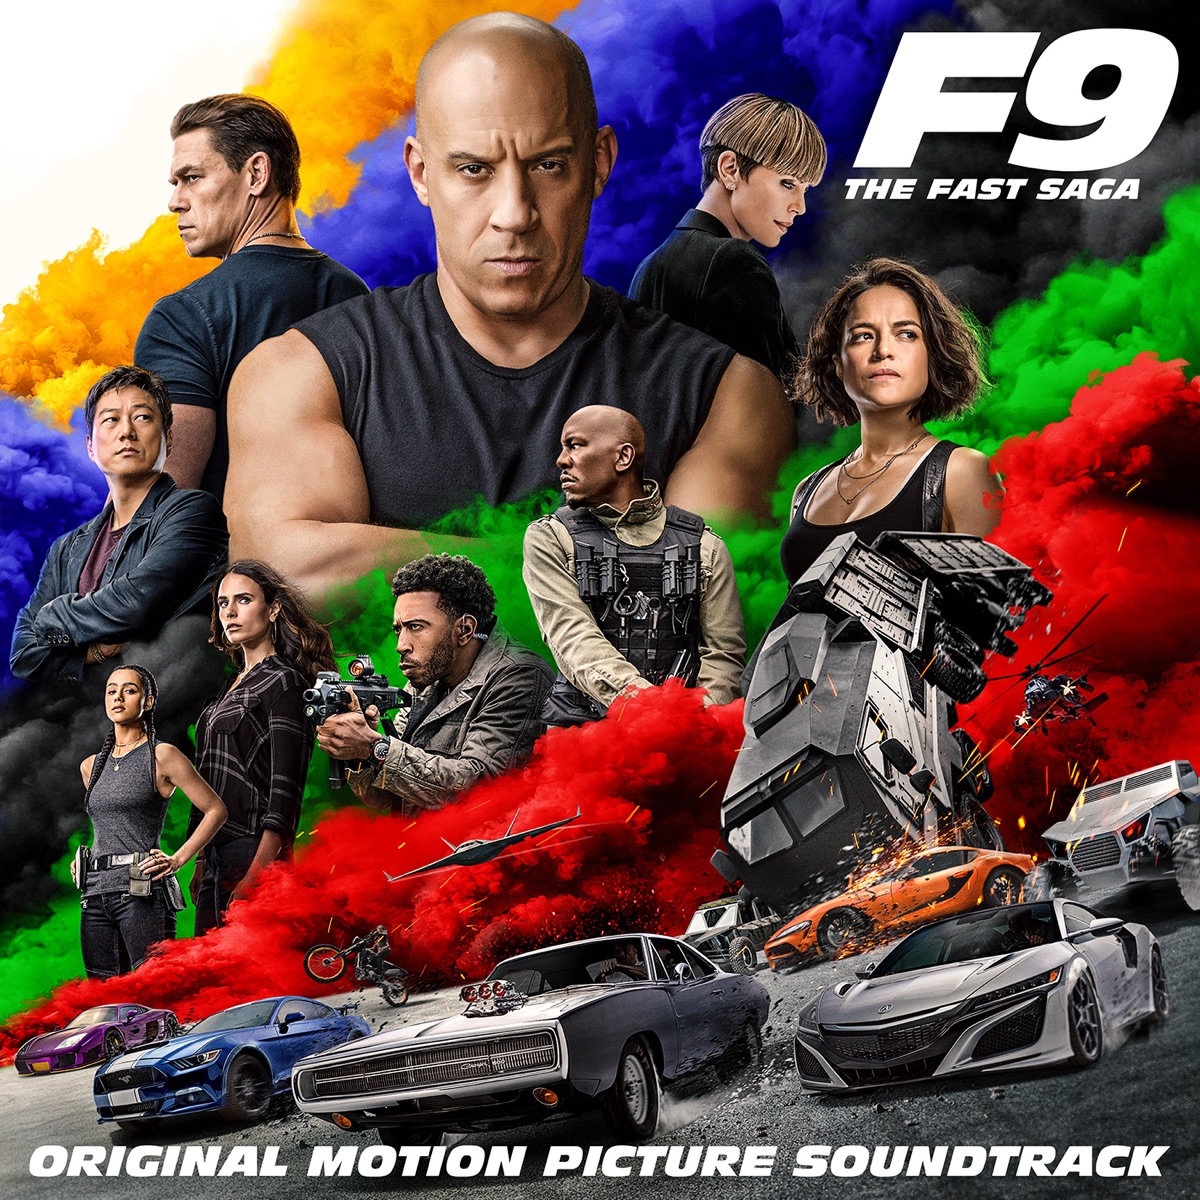 『Don Toliver, Lil Durk & Latto - Fast Lane 歌詞』収録の『F9: The Fast Saga (Original Motion Picture Soundtrack)』ジャケット